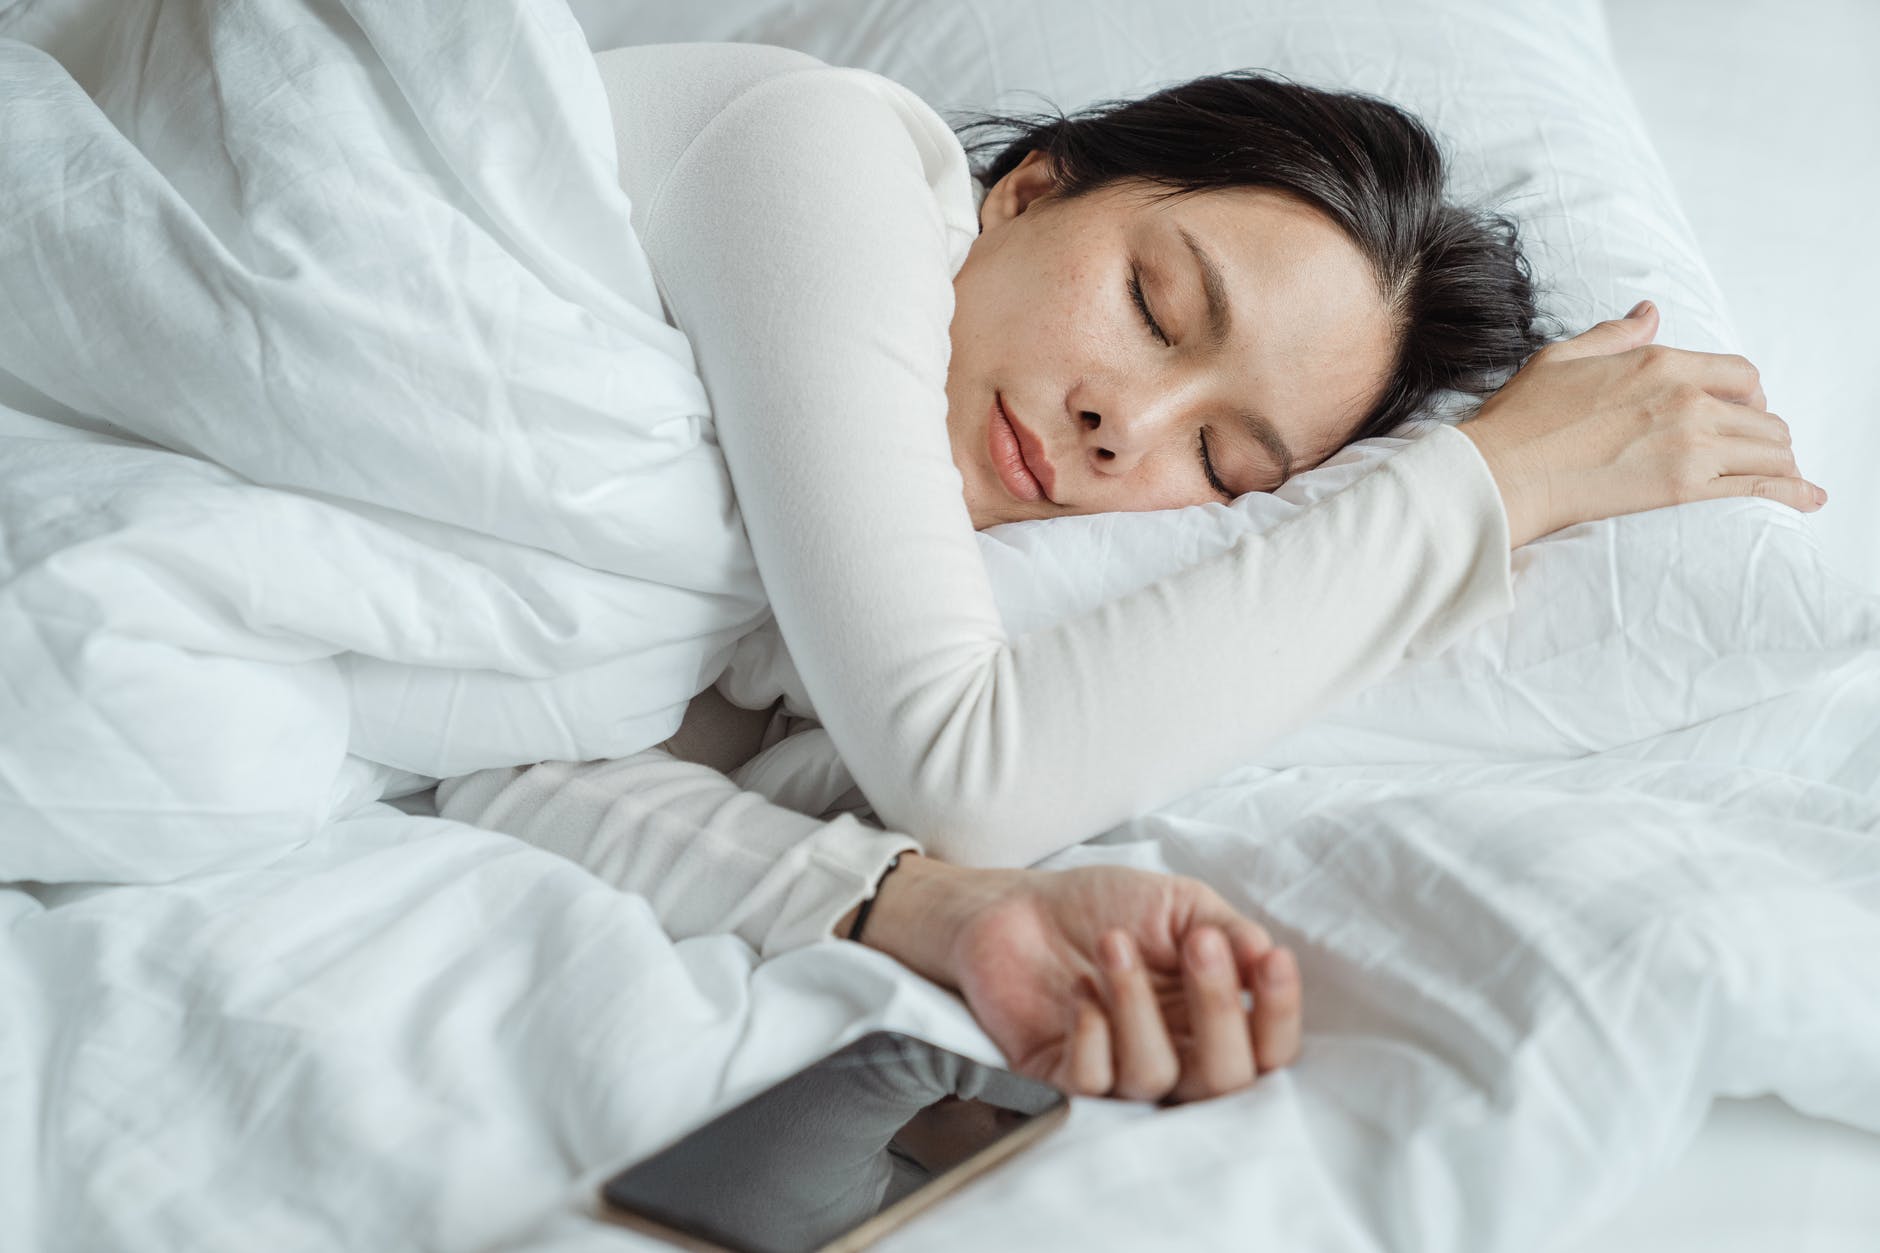 Sleeping Beauty – How Do You Heal When You Are Sleeping?